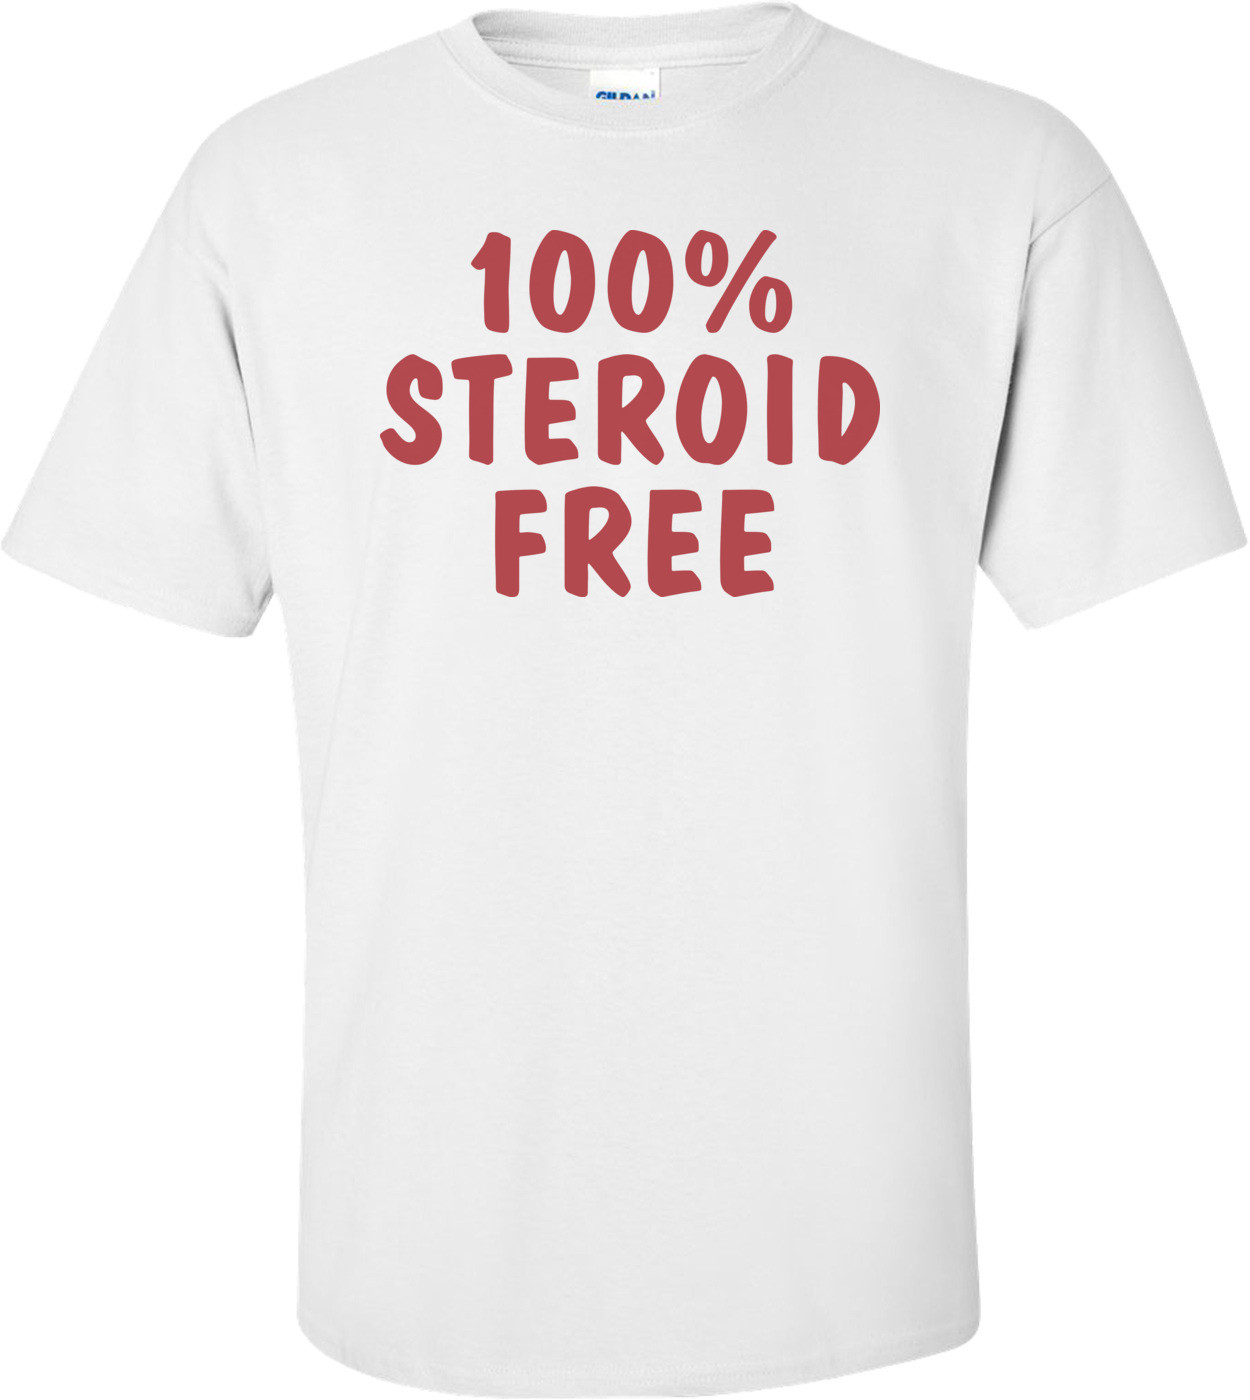 100% Steroid Free T-shirt